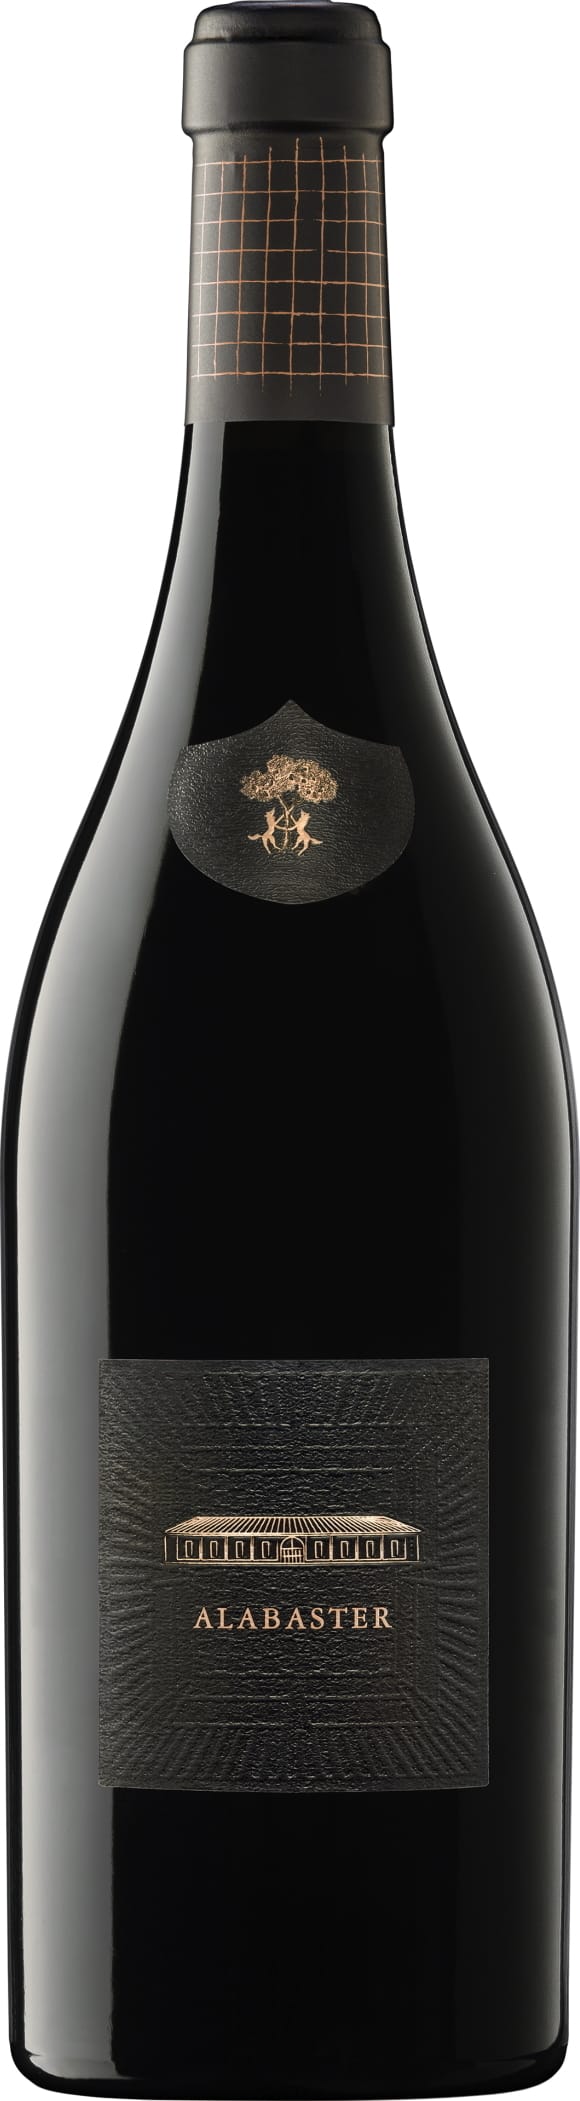 Teso la Monja Alabaster 2020 75cl - Buy Teso la Monja Wines from GREAT WINES DIRECT wine shop